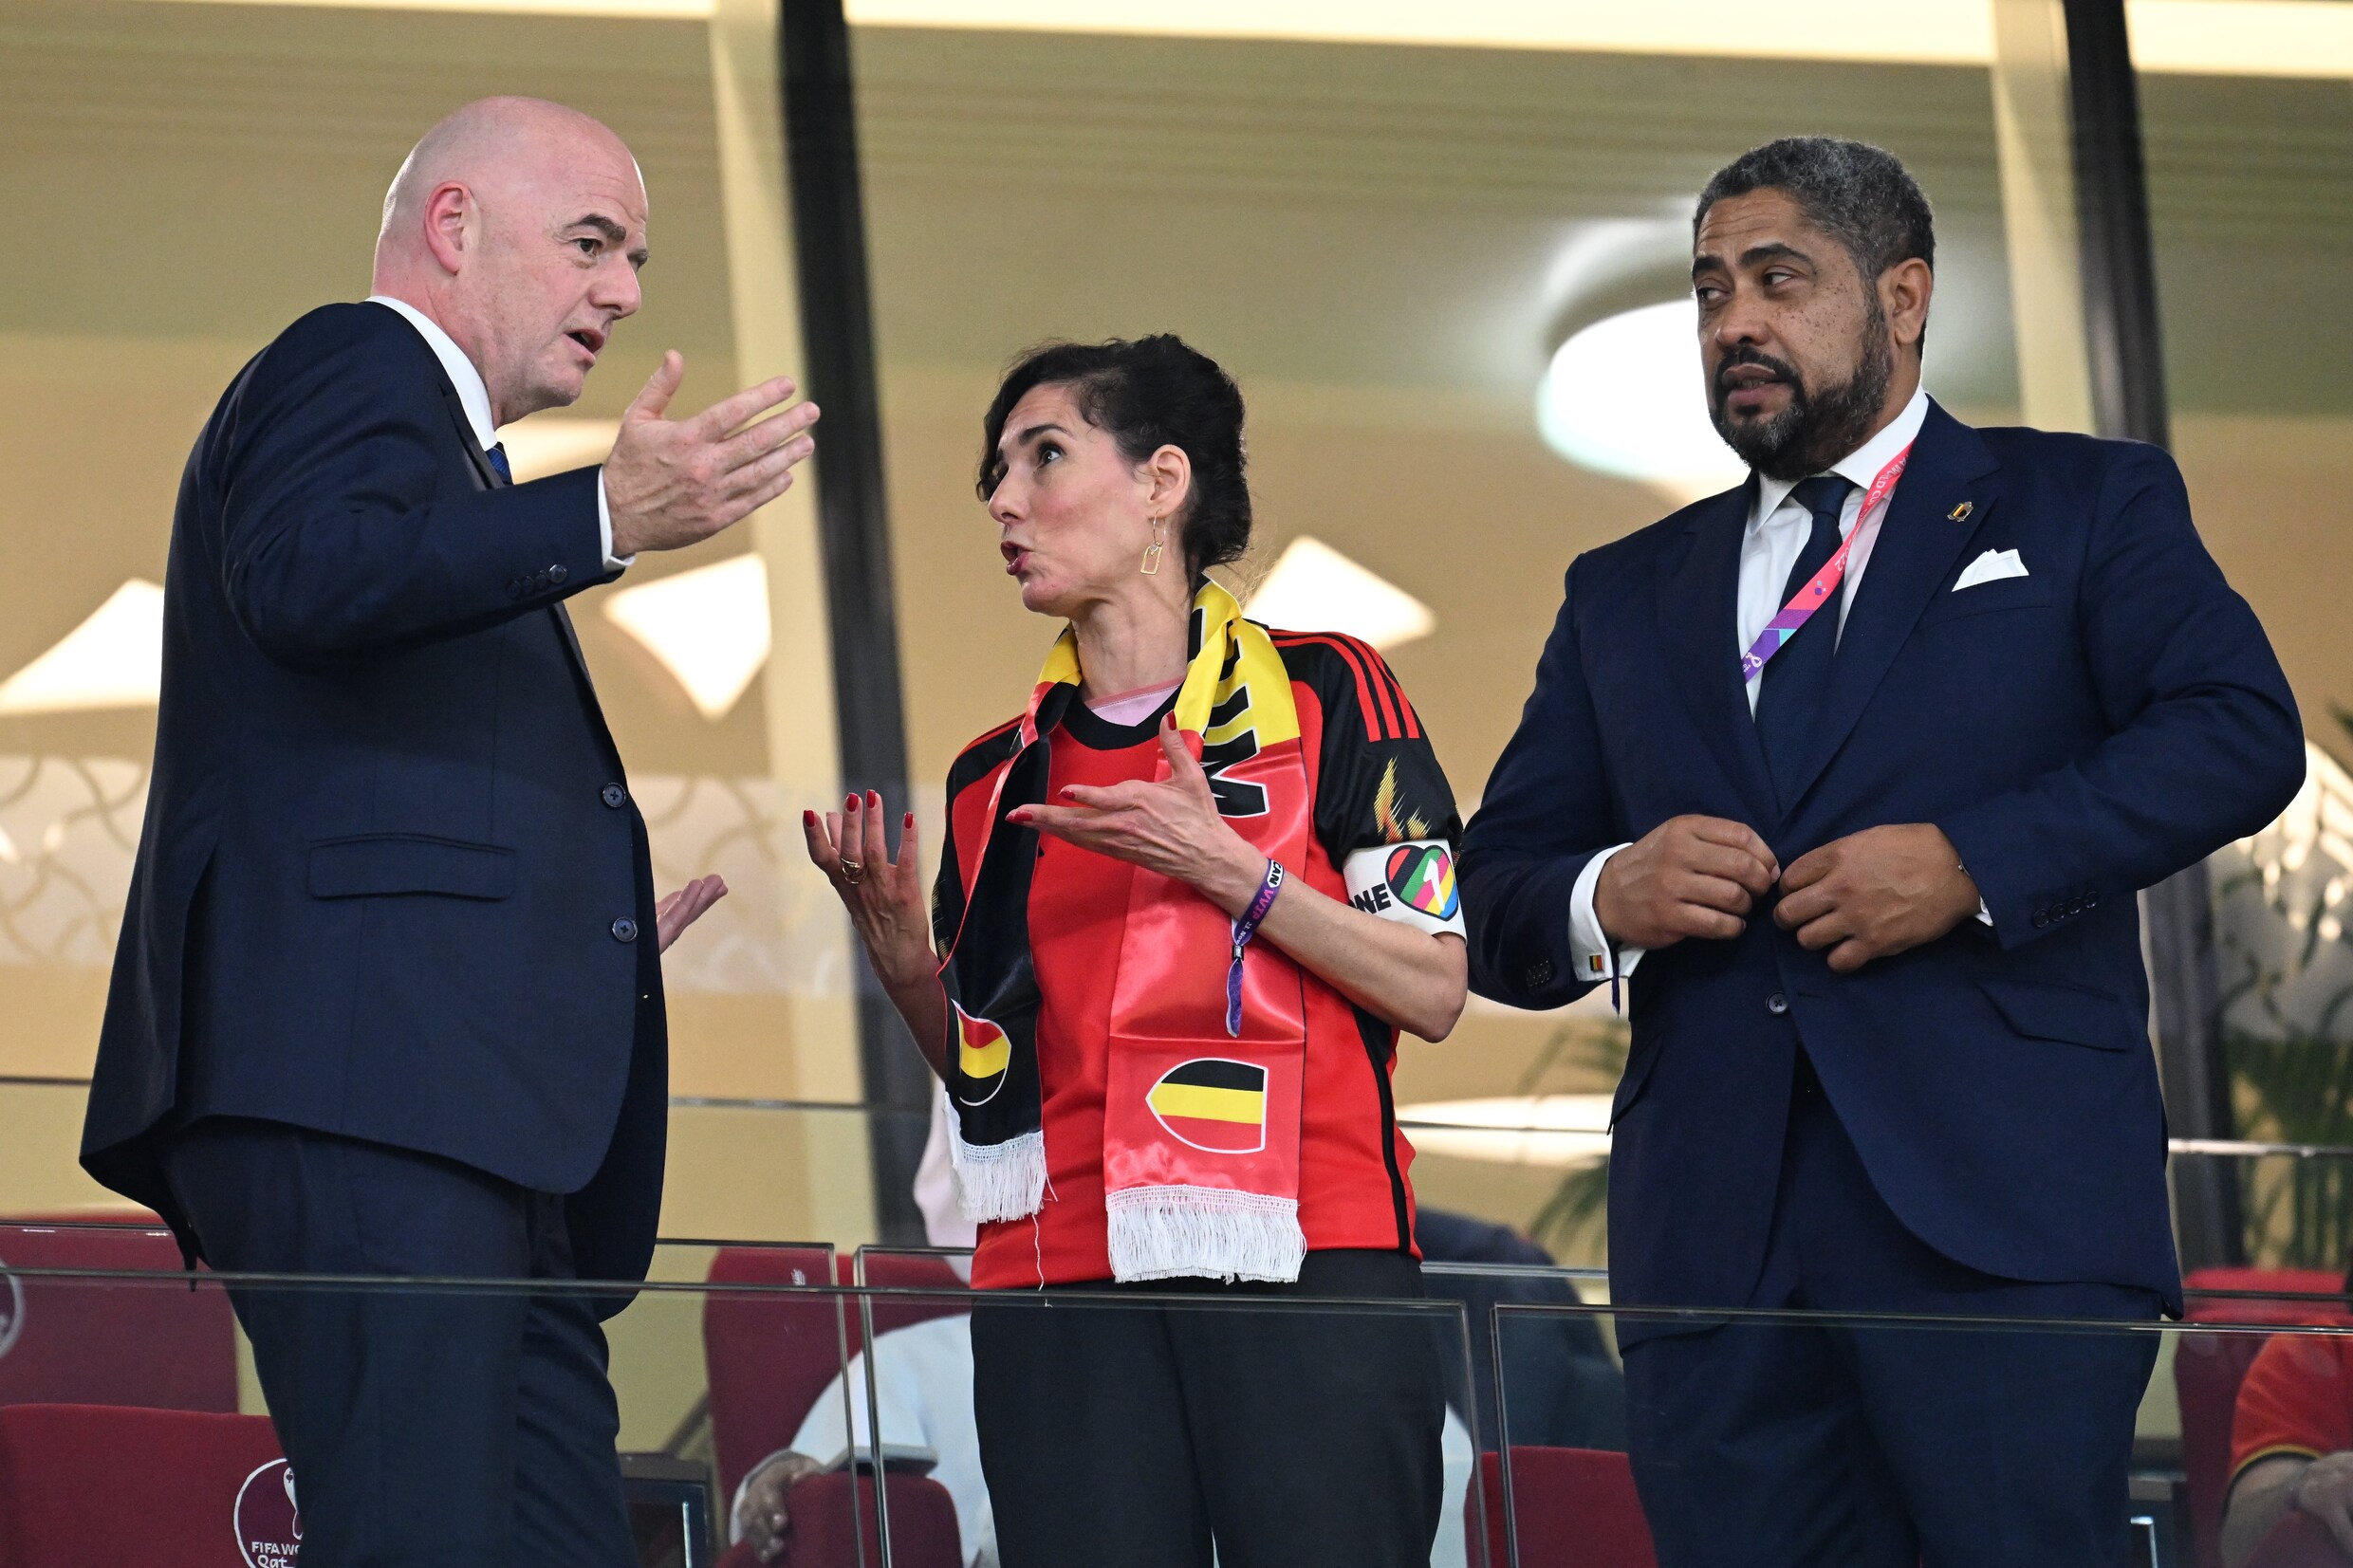 Minister Lahbib draagt ‘One Love’-band in tribune en gaat in gesprek met FIFA-baas Infantino tijdens match Duivels